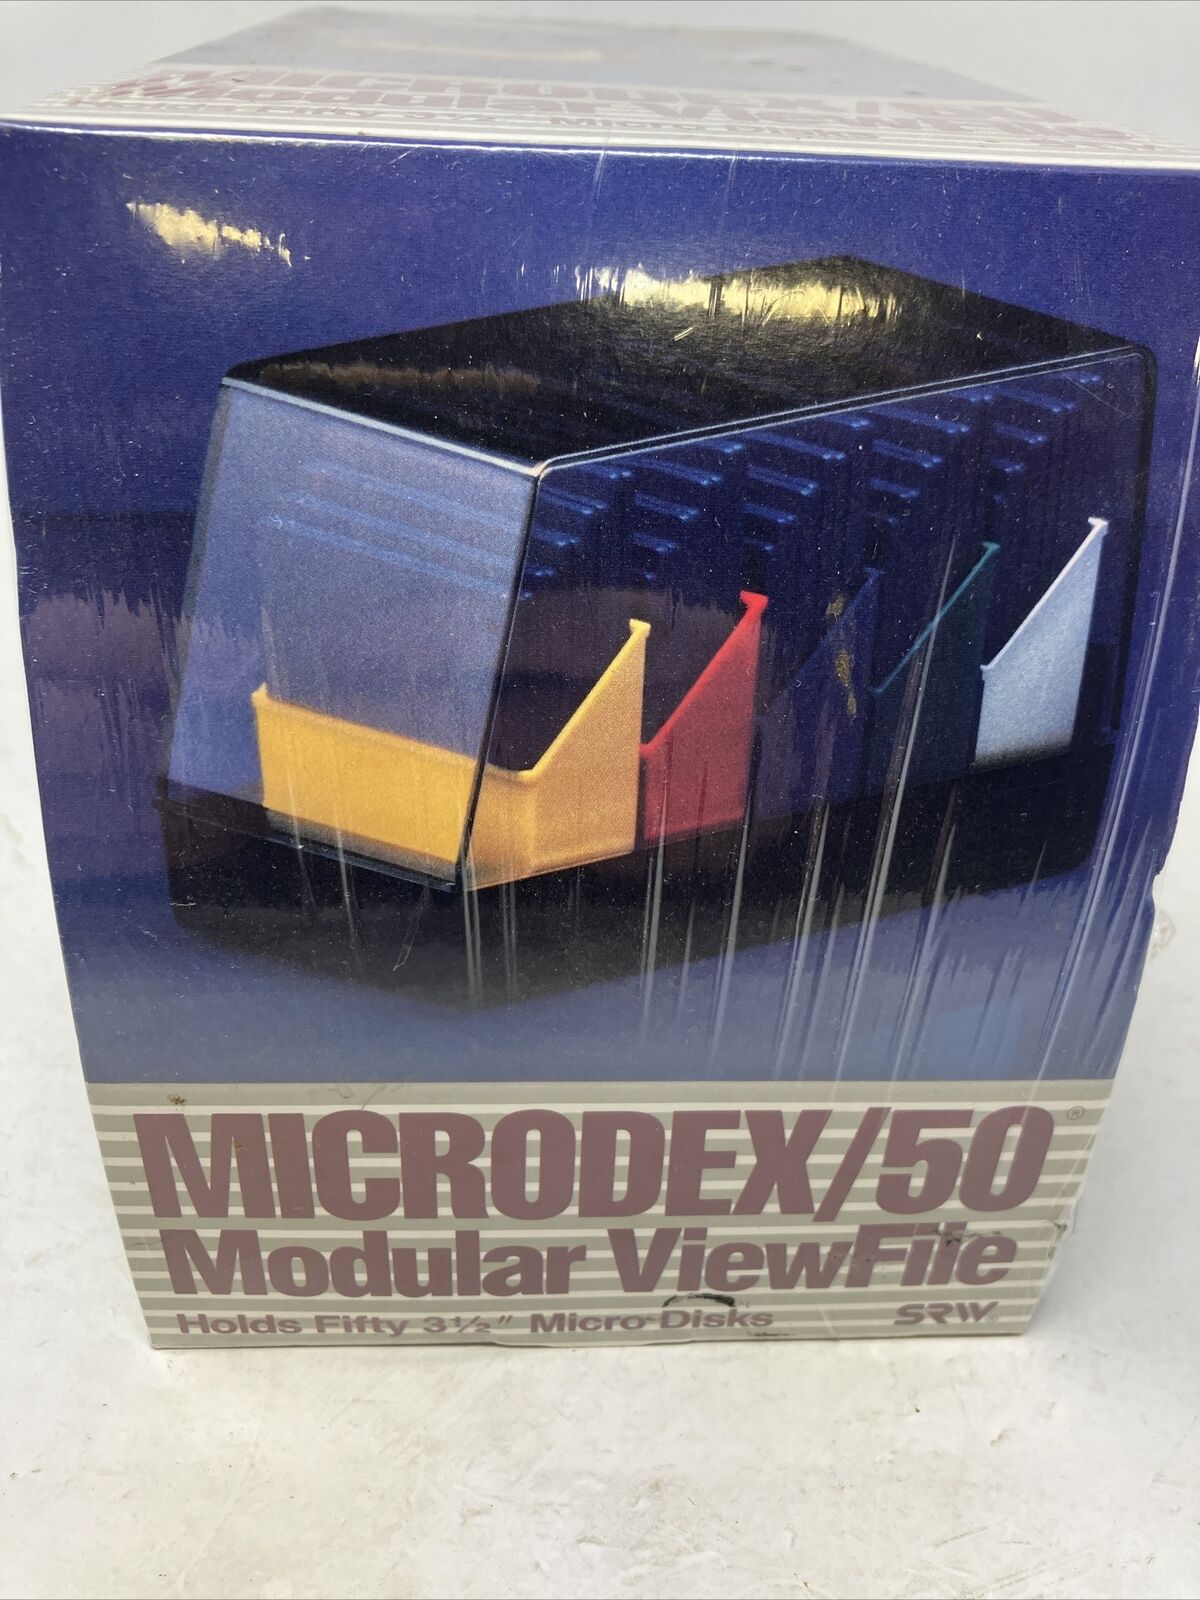 Vintage Color Coded 3.5 Inch Floppy Disc Holder For 50 Discs. 1988 SRW